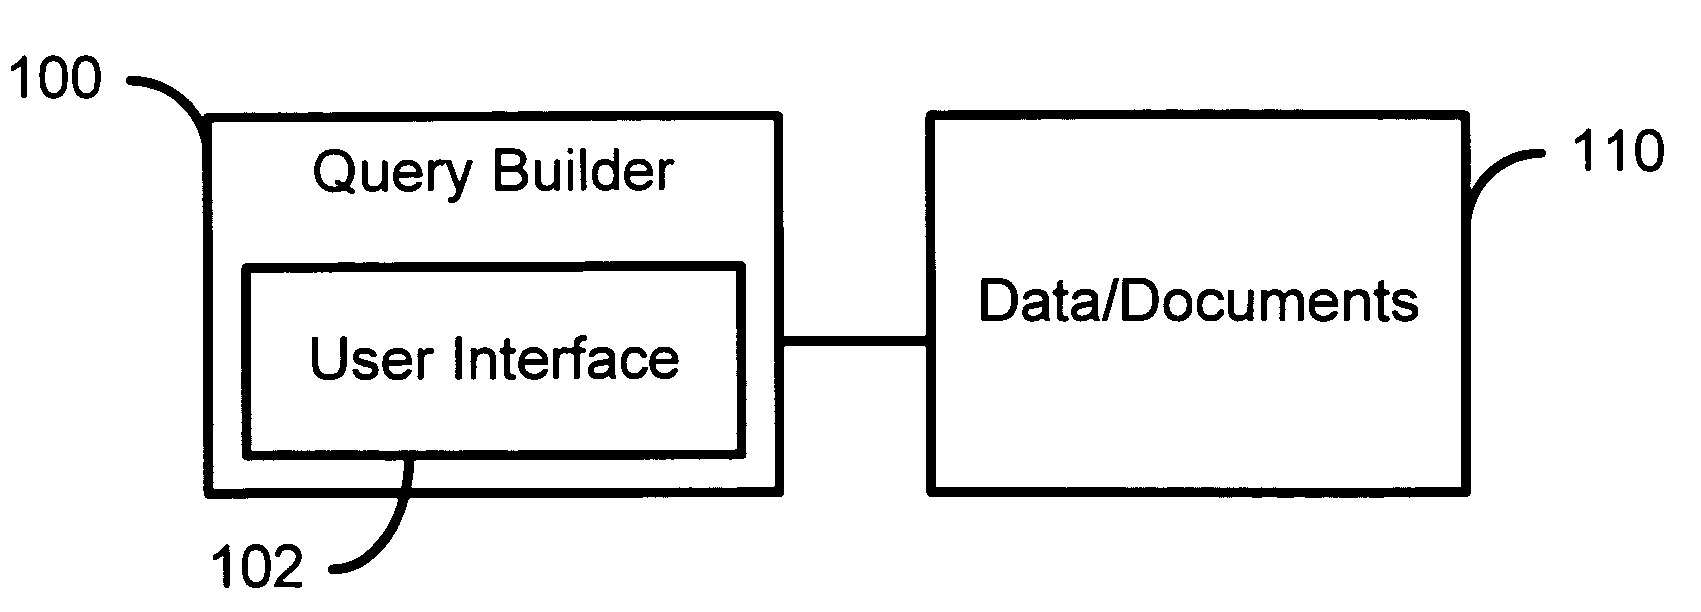 Query builder using context sensitive grids